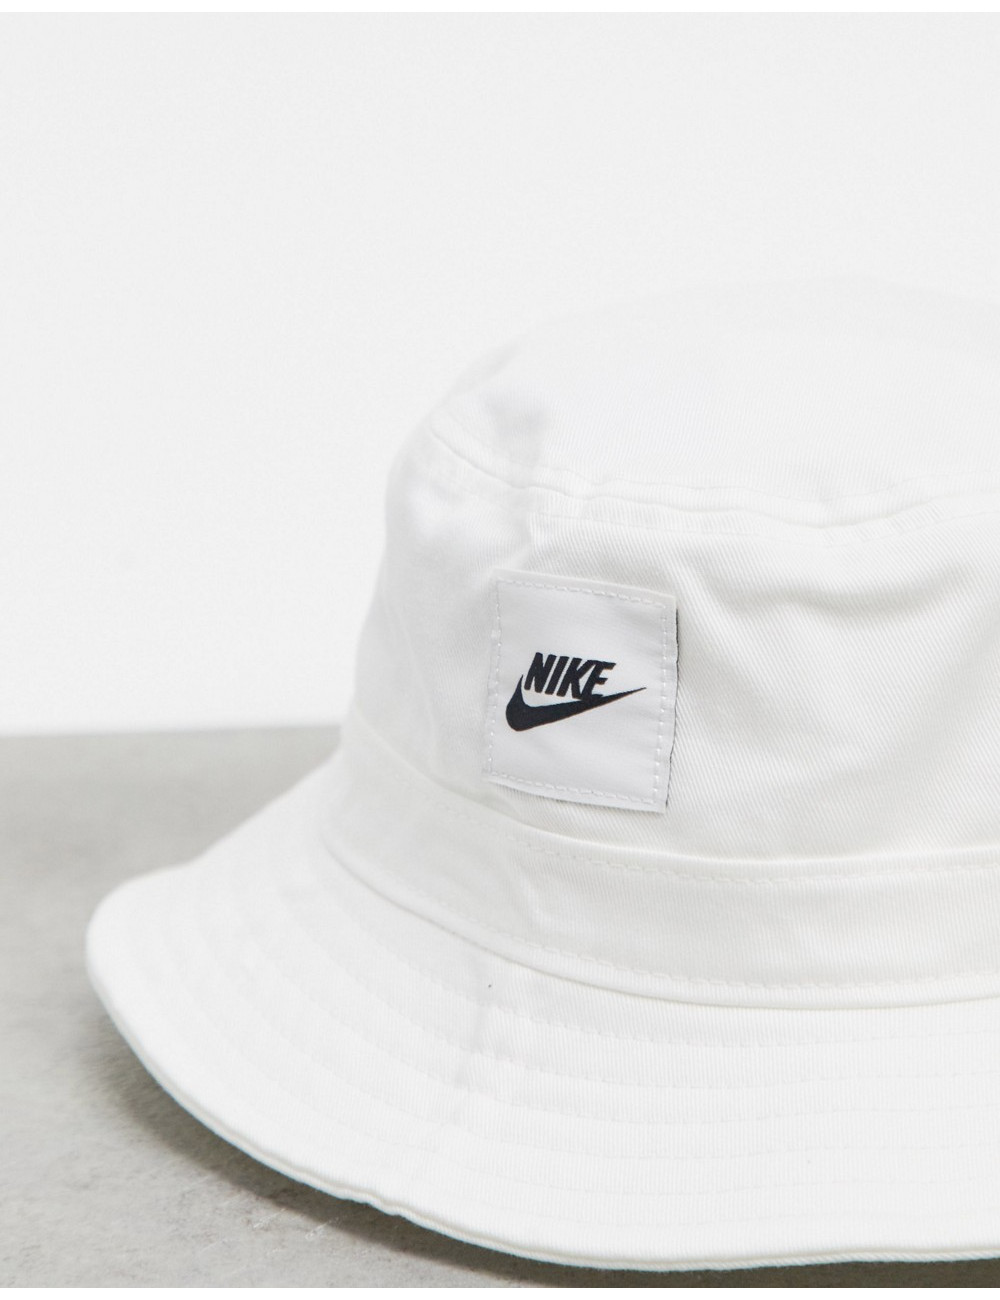 Nike bucket hat with logo...